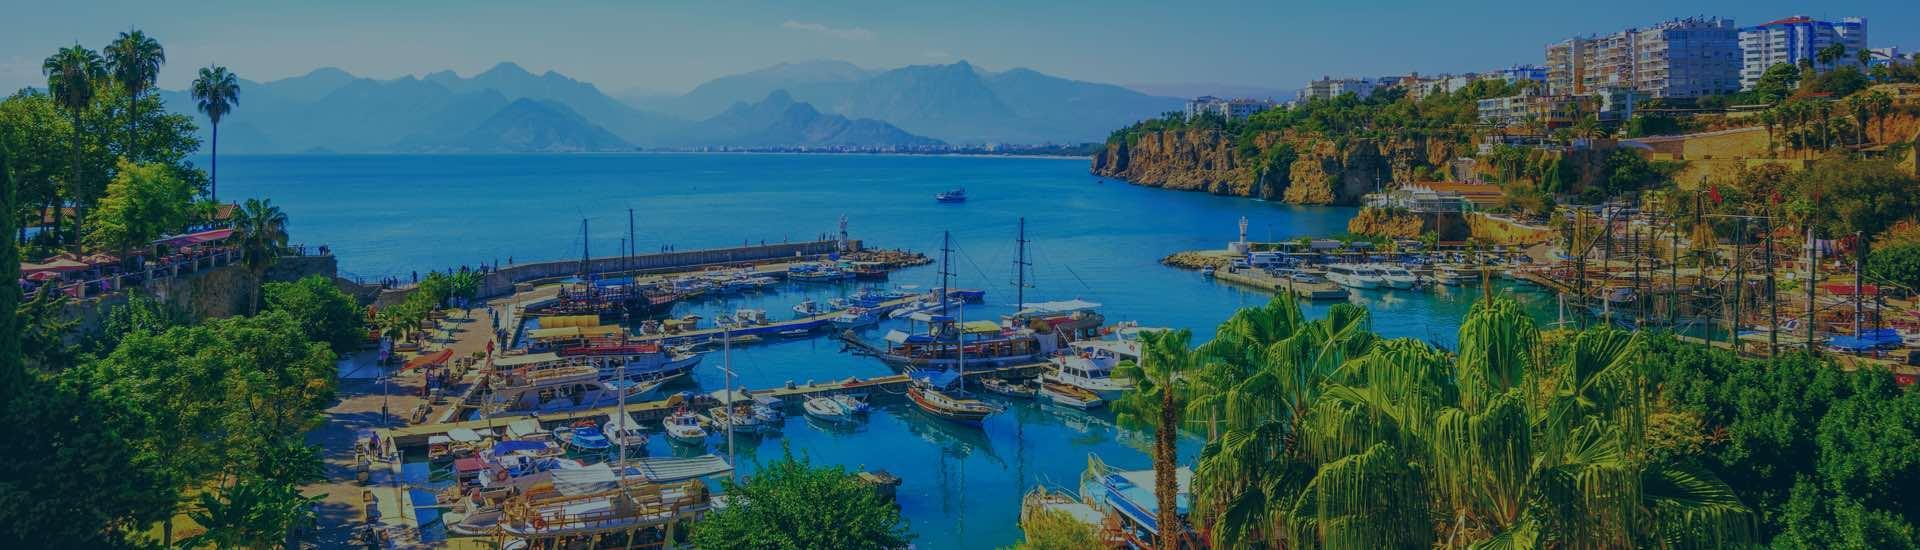 Find the Best Hotels in Antalya